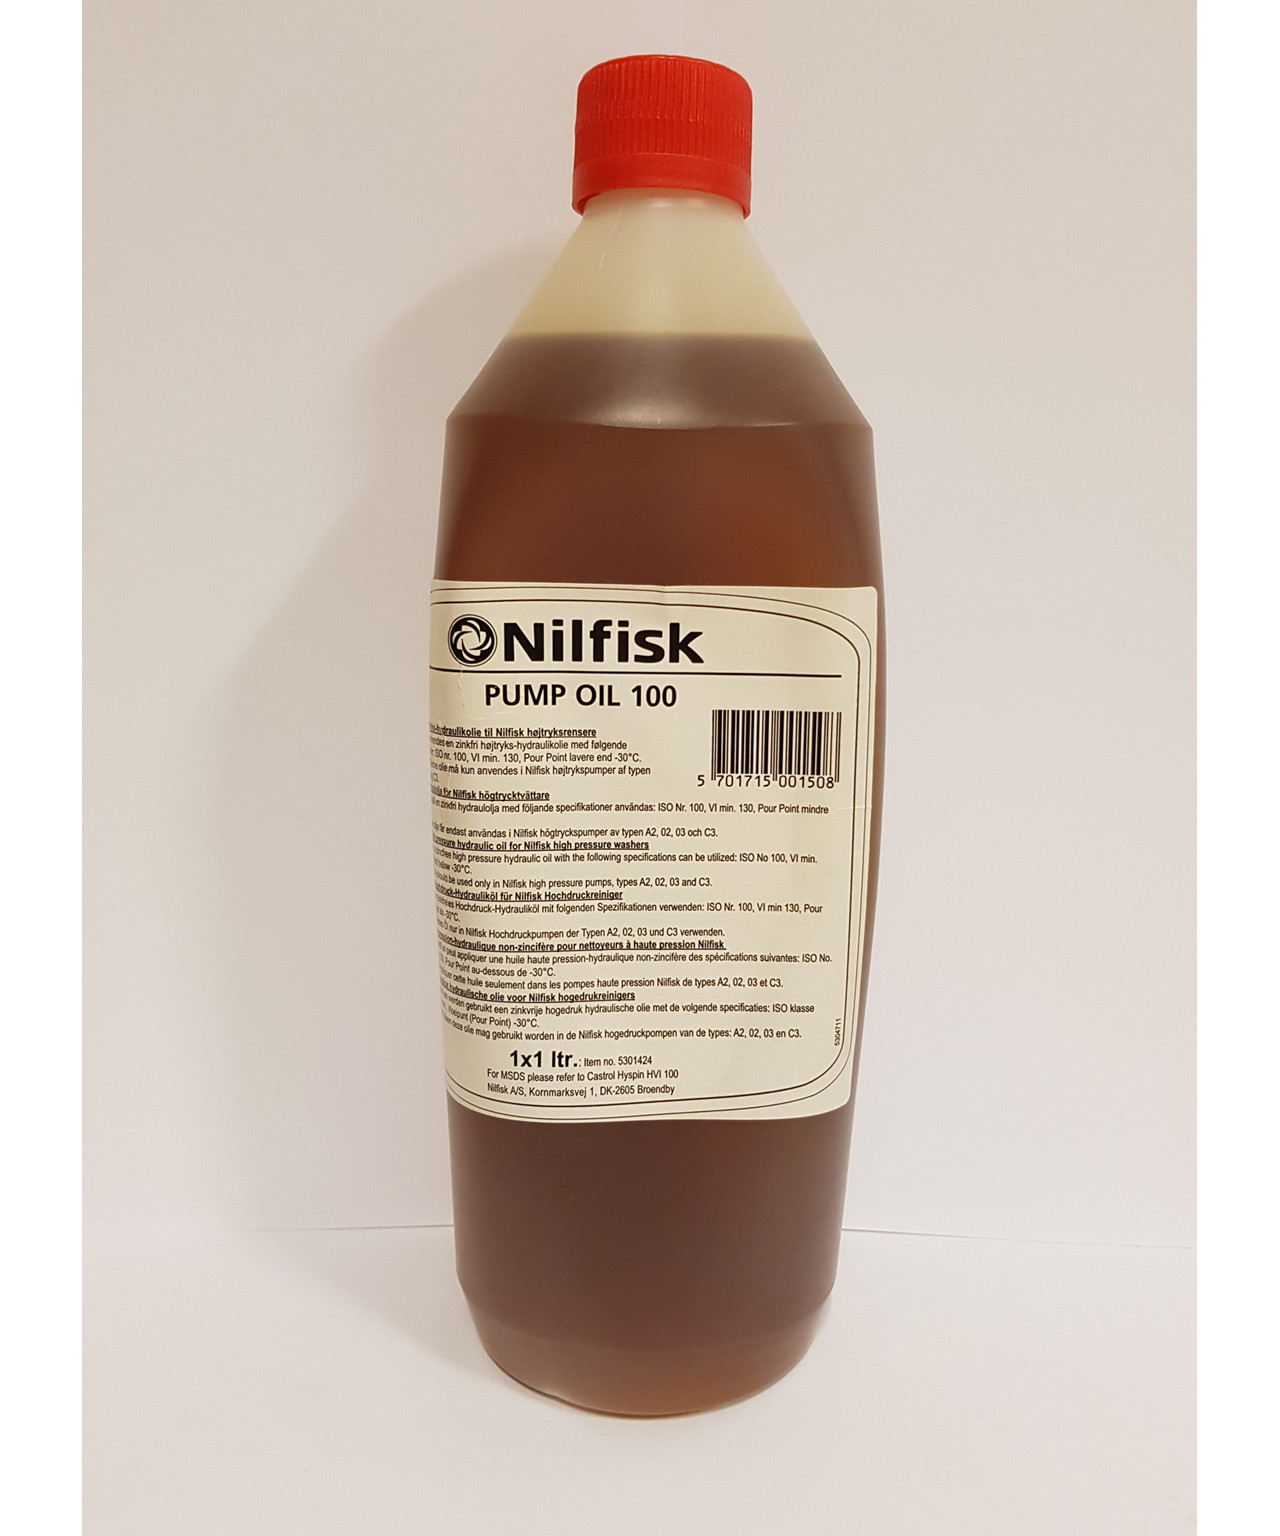 Nilfisk Pump Oil 100